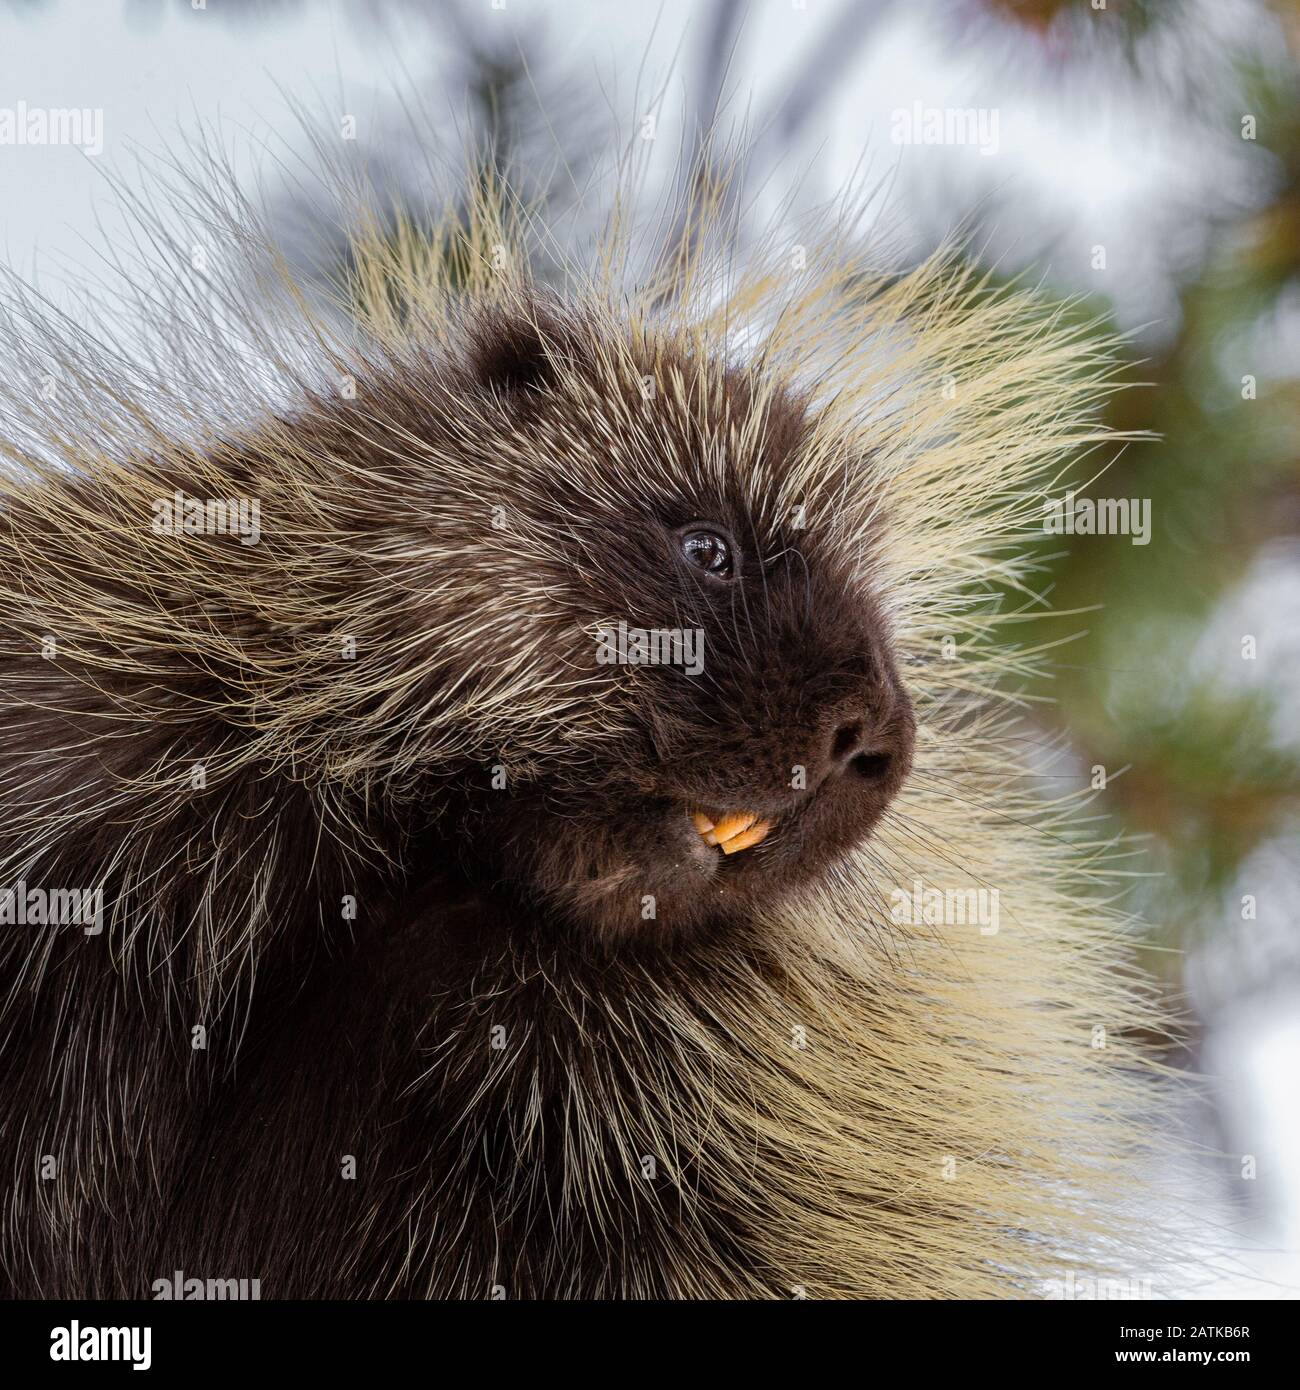 American Porcupine Quills Defense Wildlife Stock Photo - Image of wild,  quills: 27375796